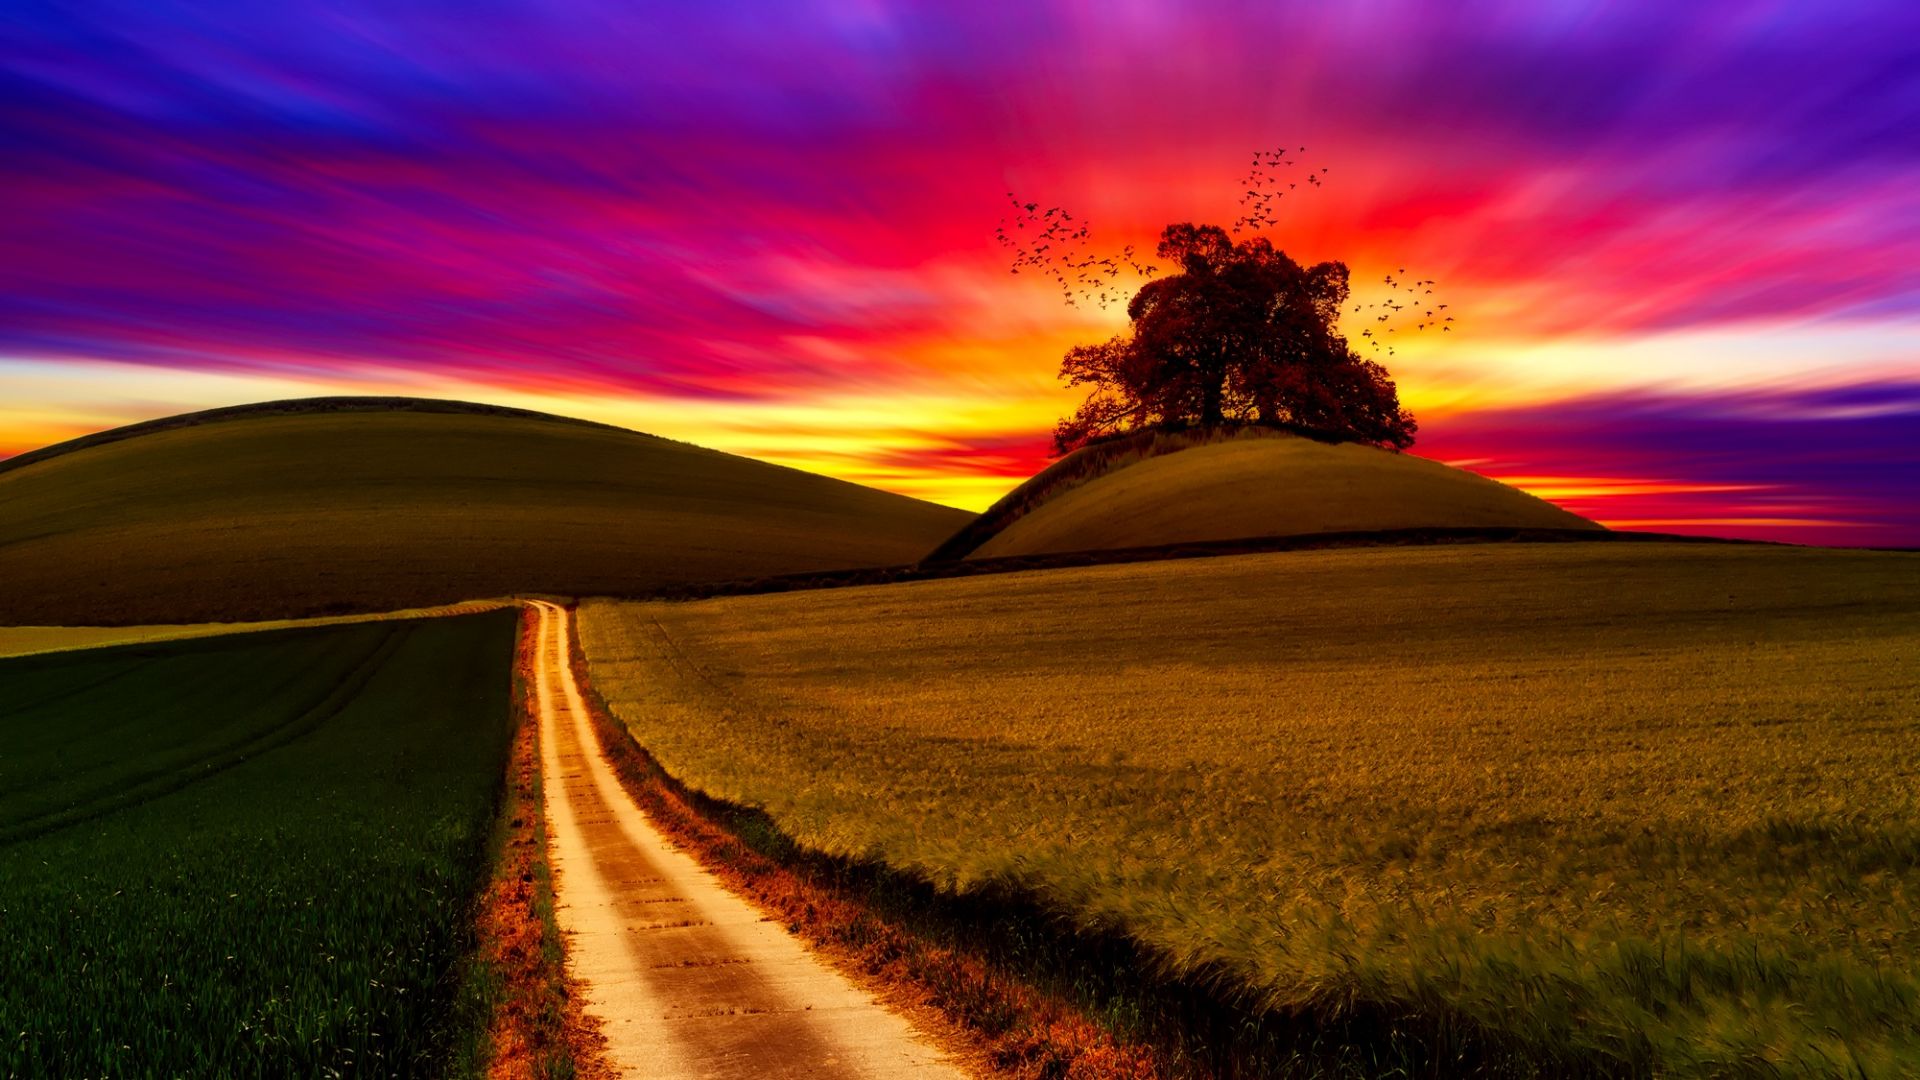 Desktop Wallpaper Sunset, Colorful Sky, Tree, Landscape, Nature, Hd Image,  Picture, Background, 7qppsy